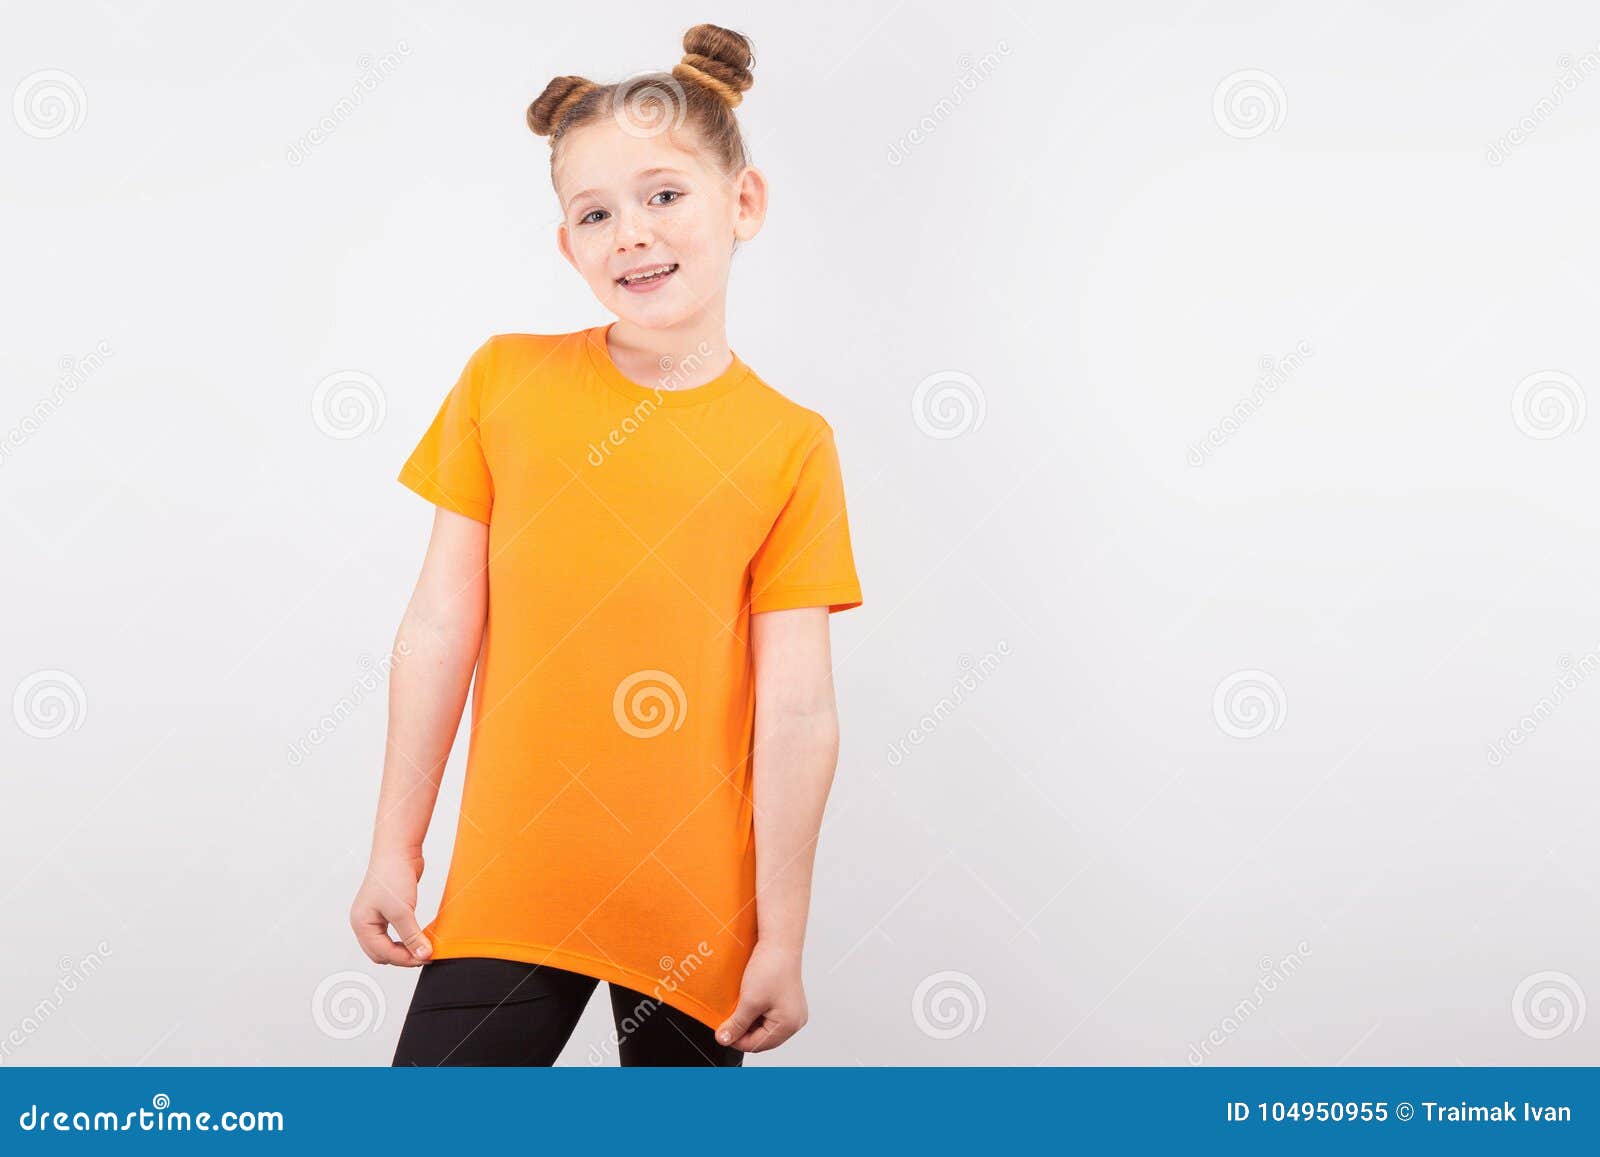 Little Girl Pulling Up Her Shirt